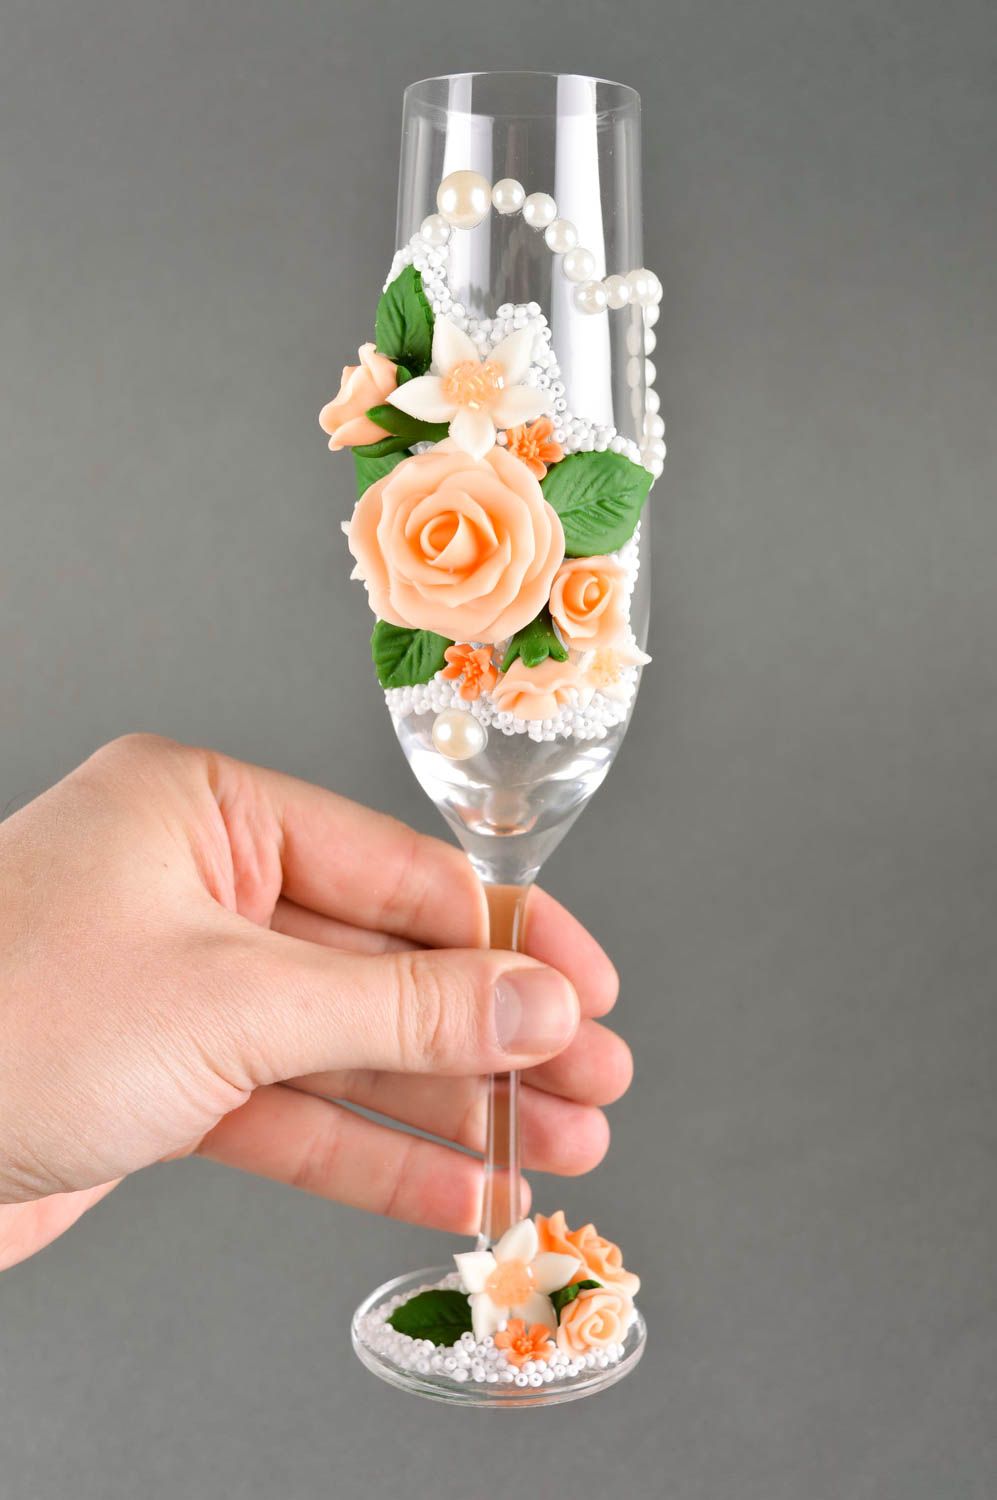 Unusual handmade wine glass champagne glass table setting stemware ideas photo 5